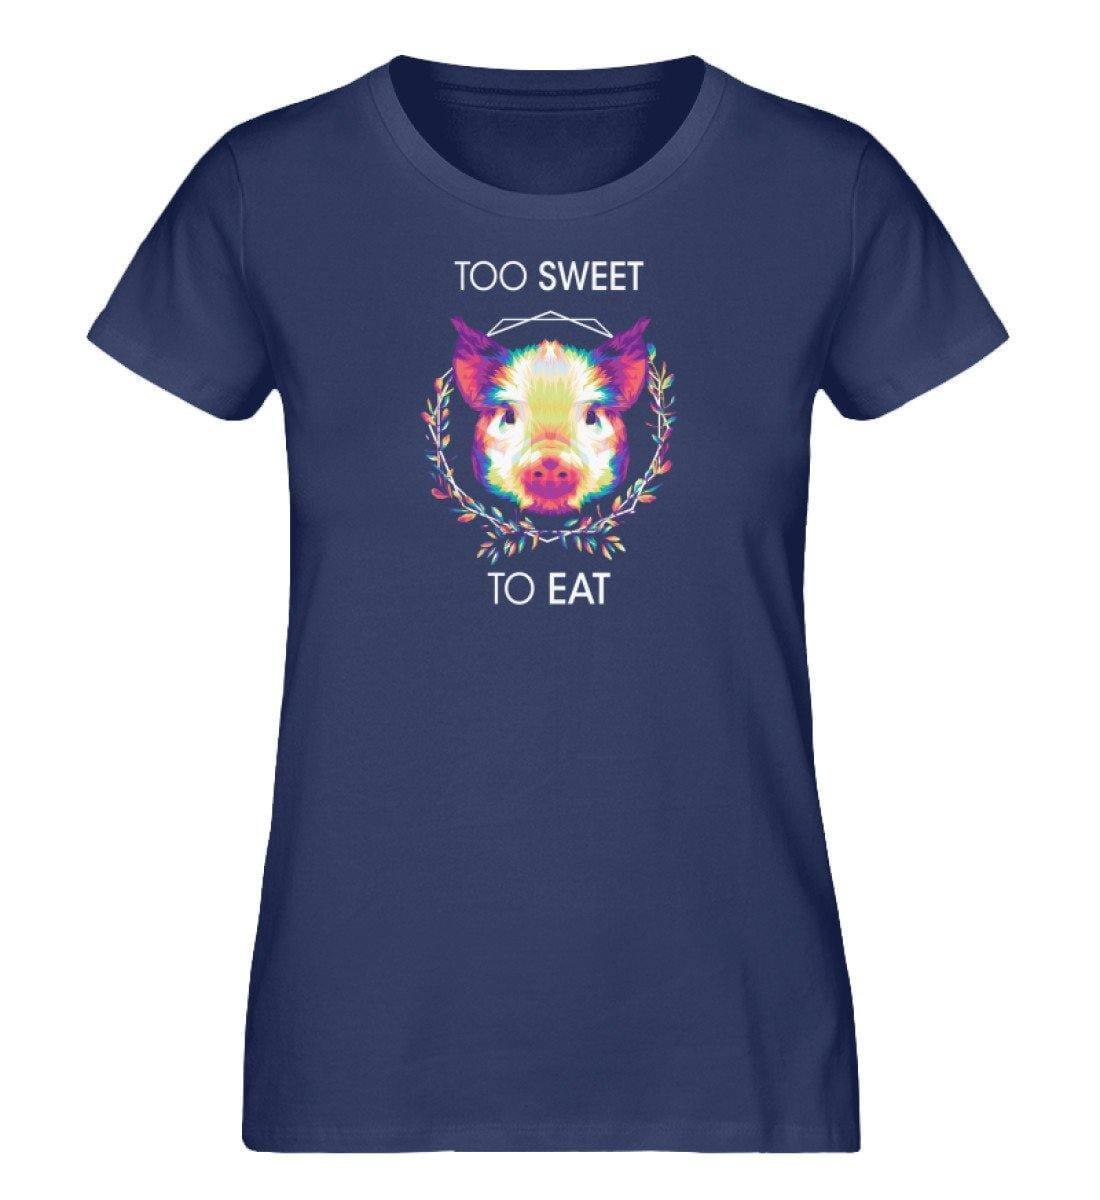 Too sweet to eat - Damen Organic Shirt - Team Vegan © vegan t shirt